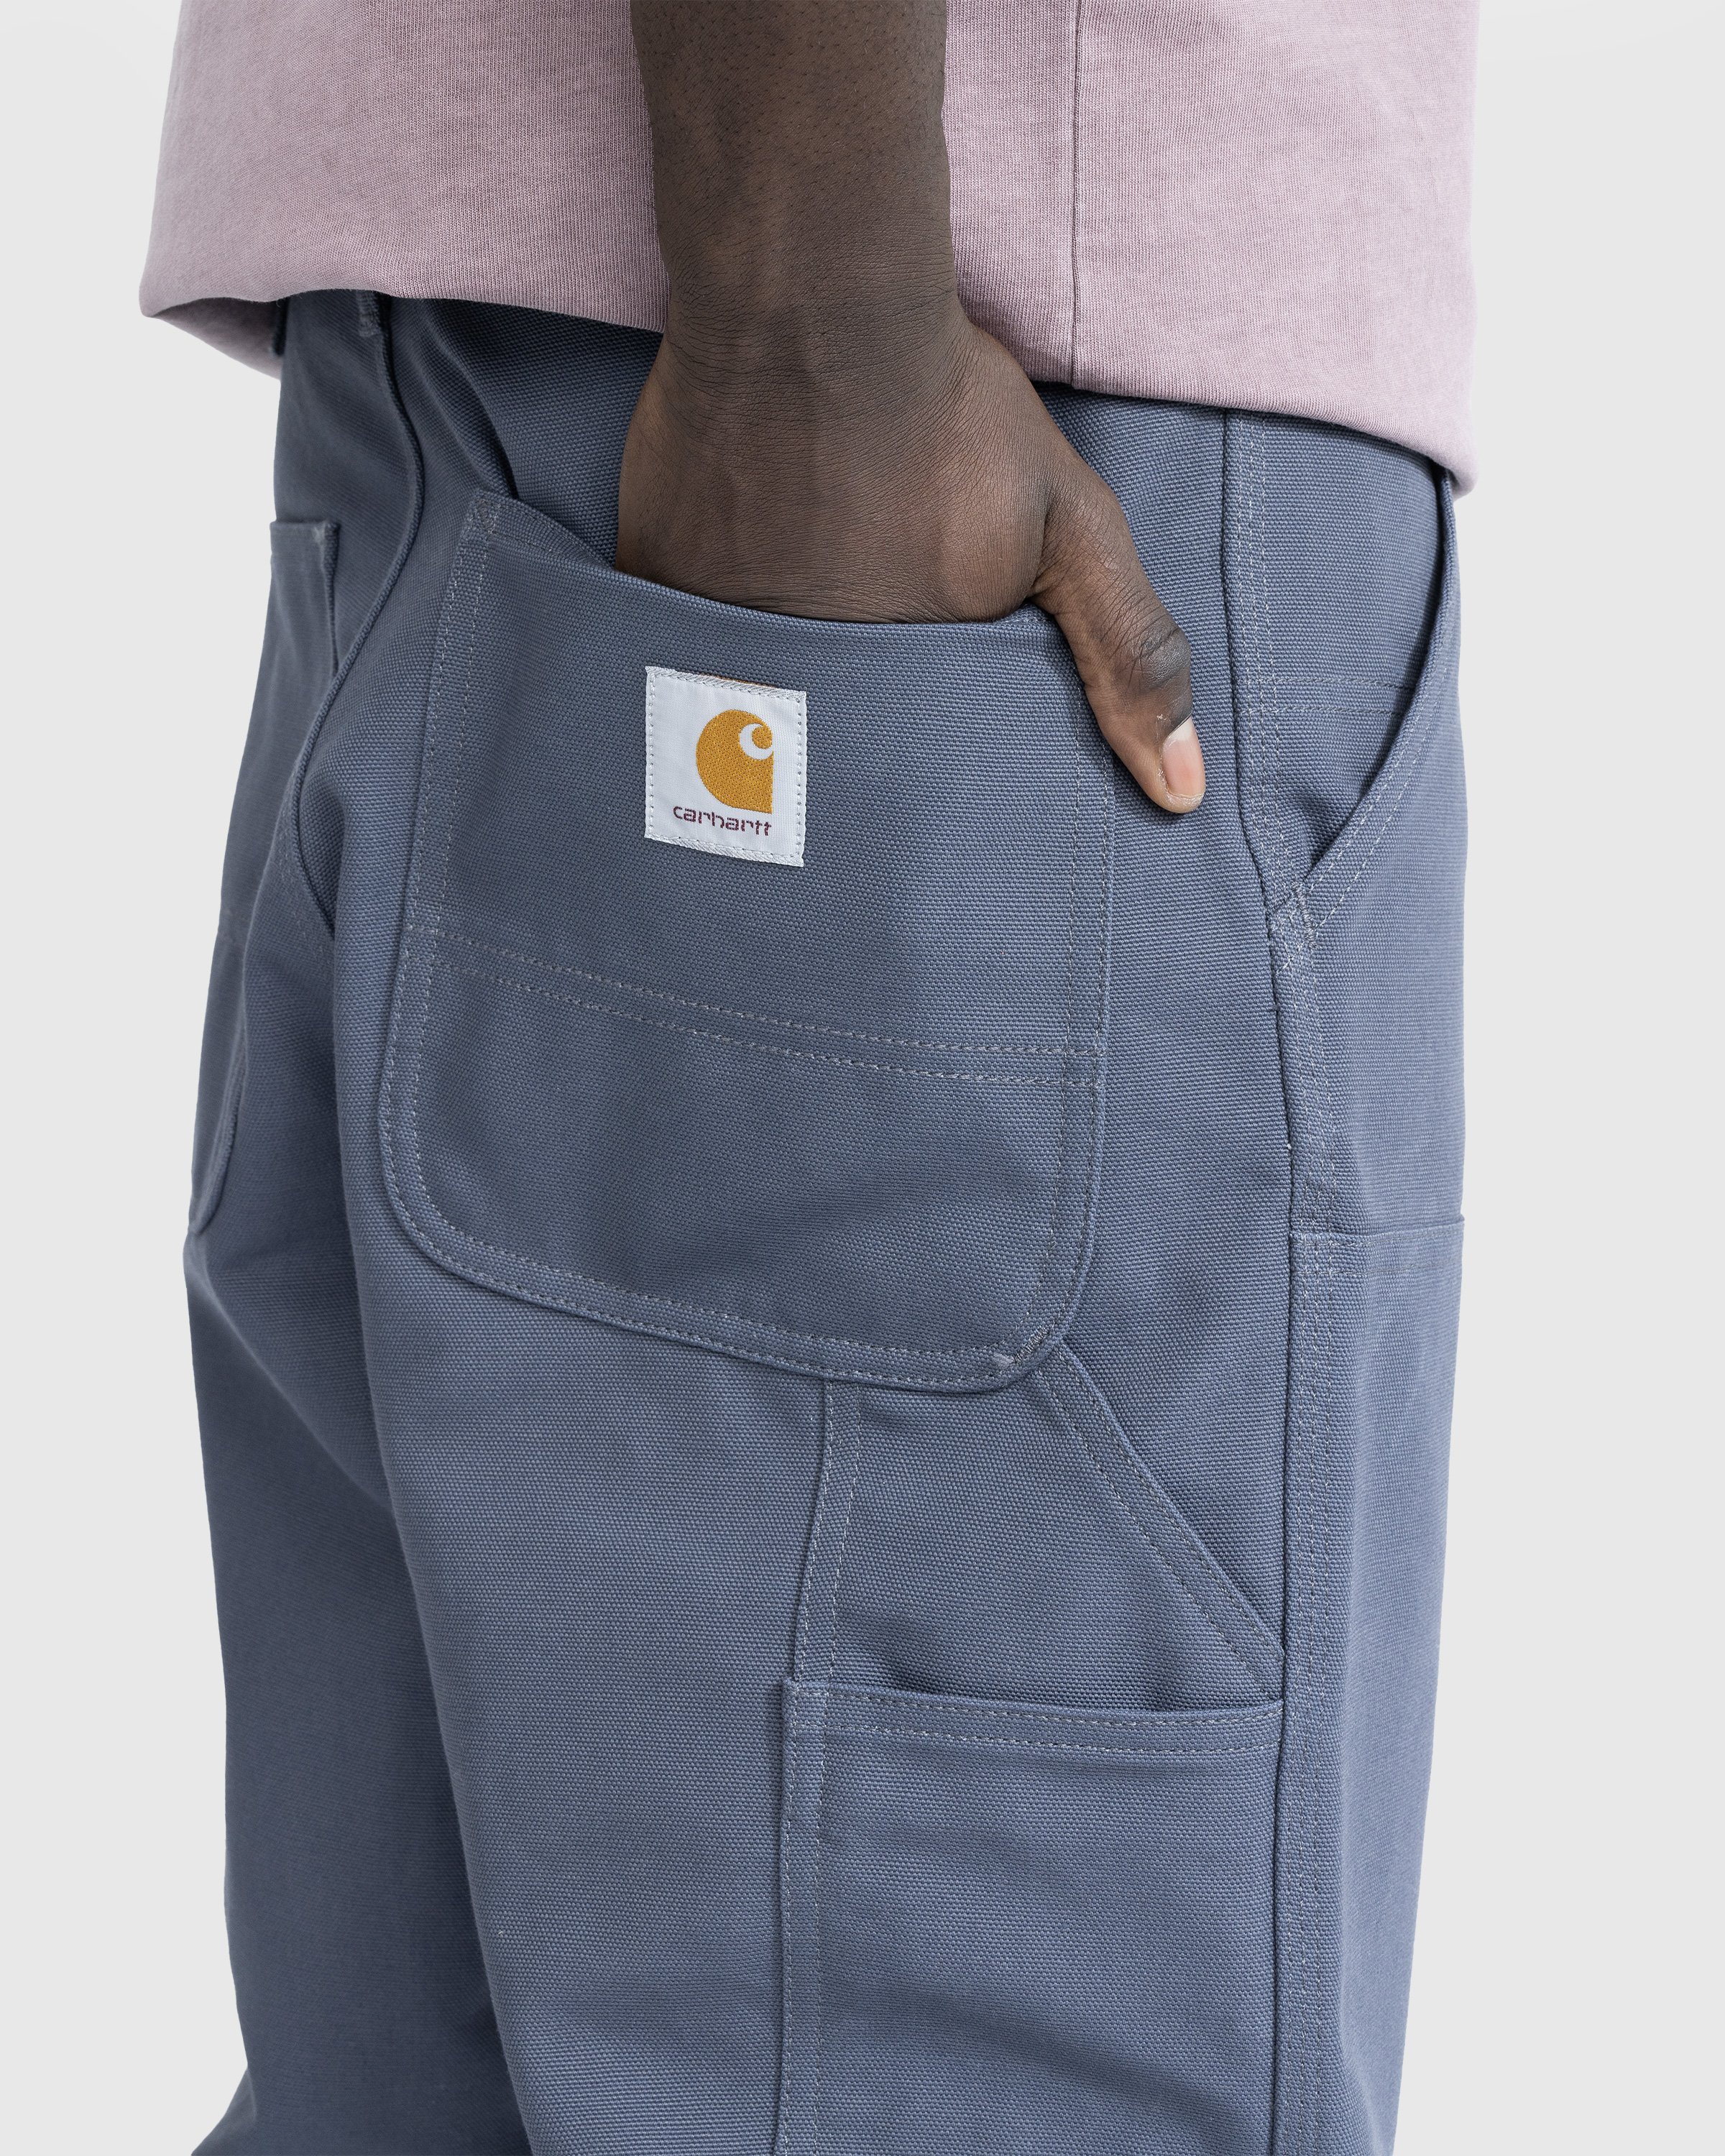 Carhartt WIP - Double Knee Pant Zeus/Rigid - Clothing - Grey - Image 7